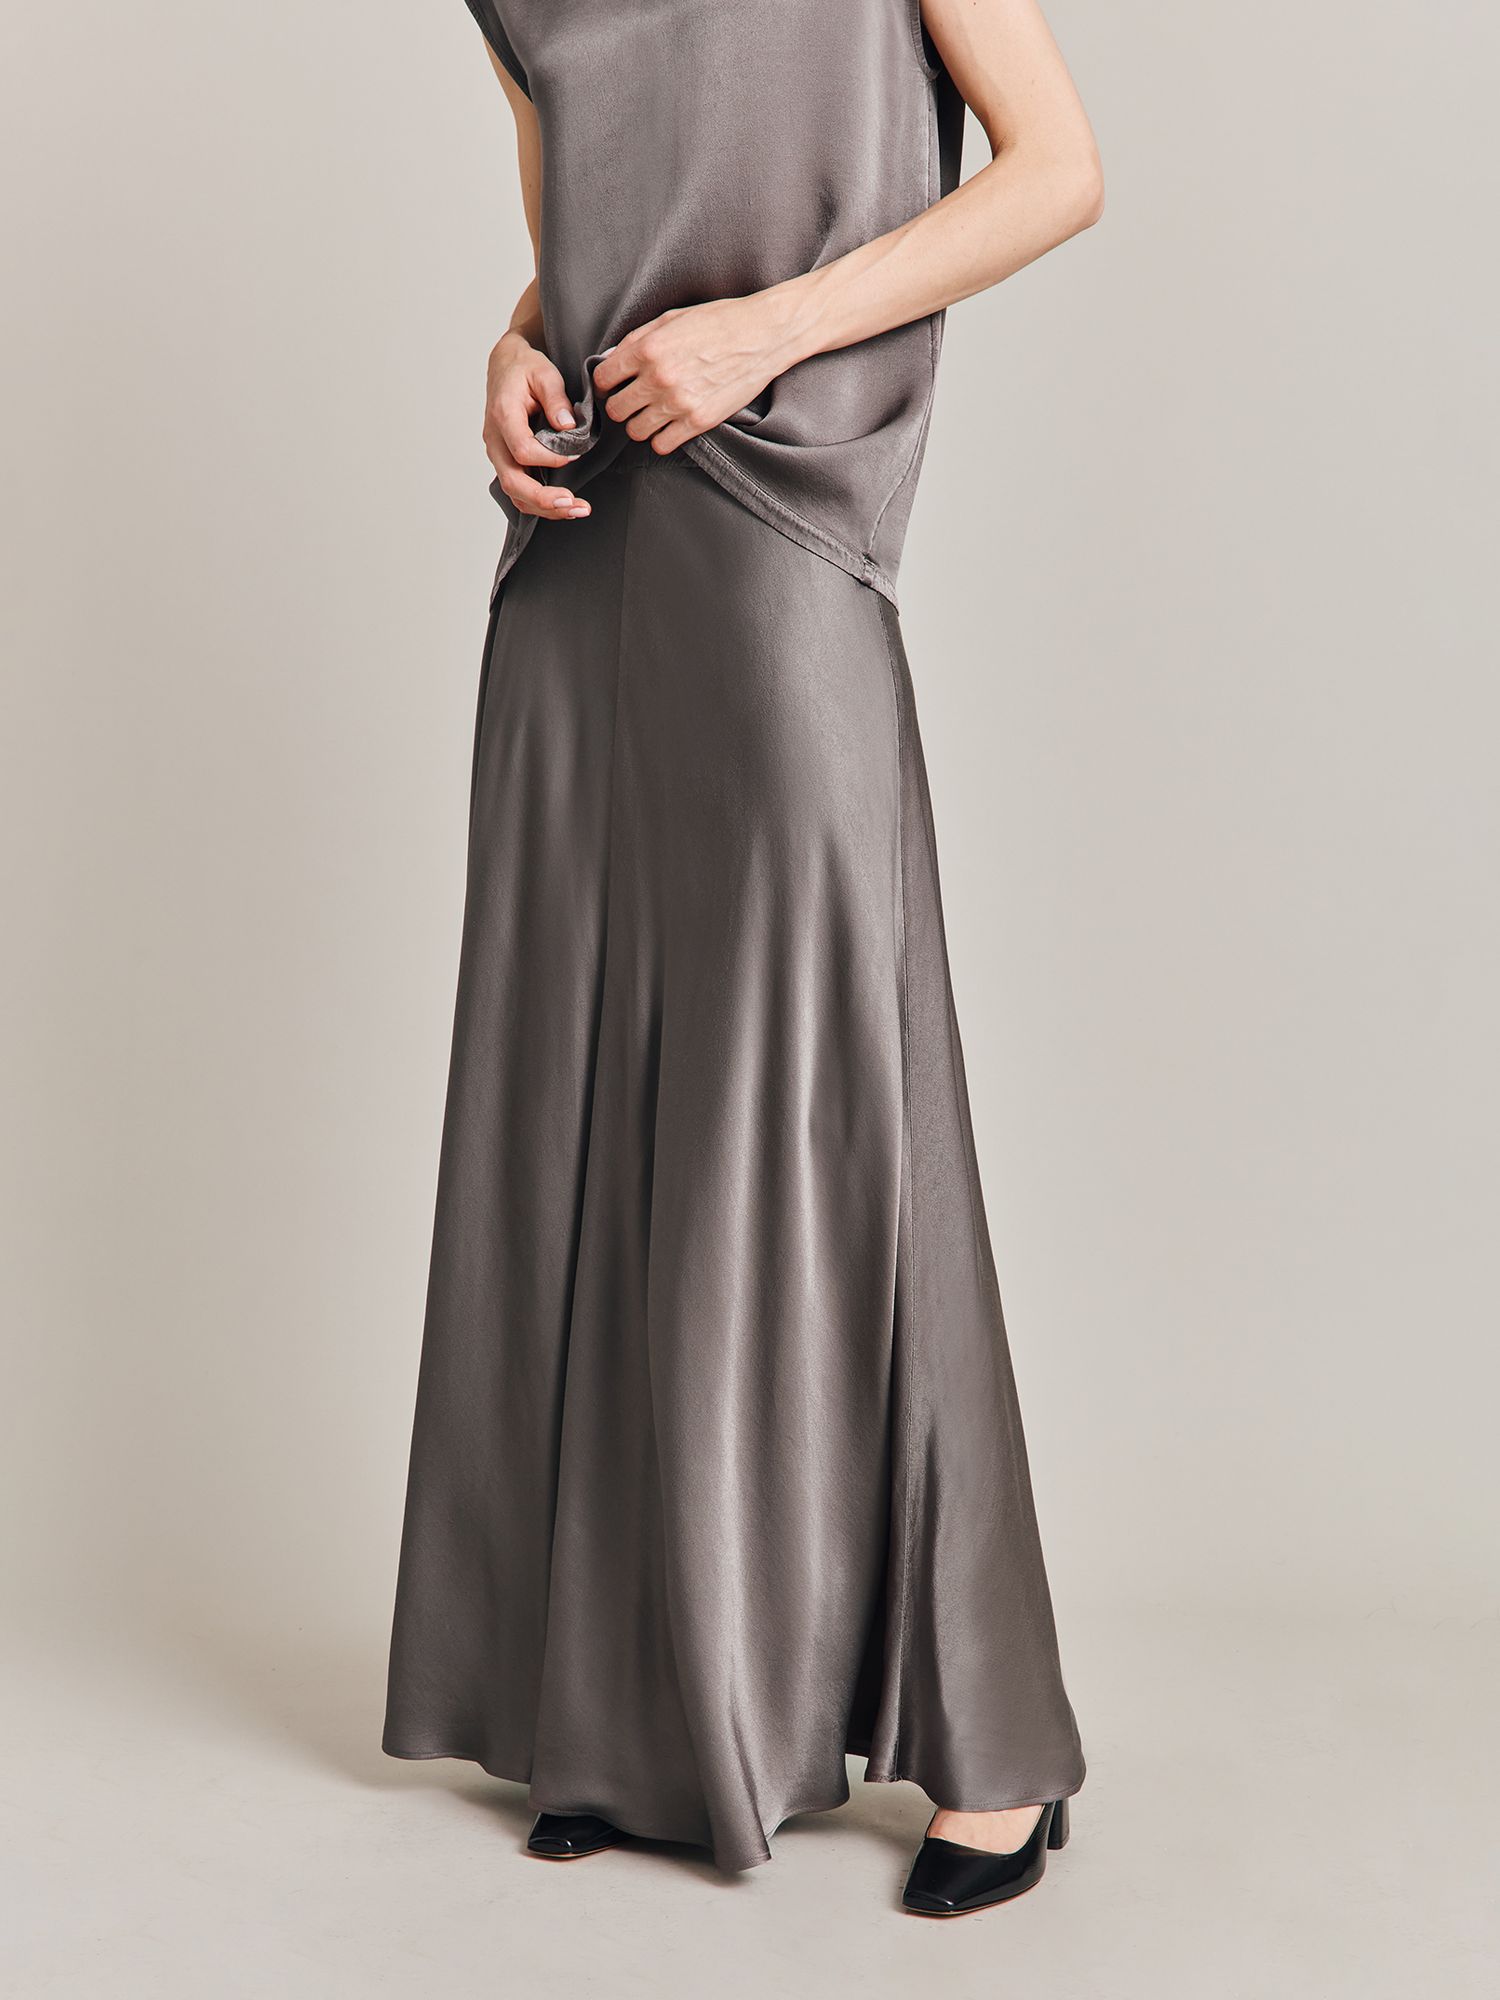 Ghost Adrianna Satin Maxi Skirt, Grey at John Lewis & Partners